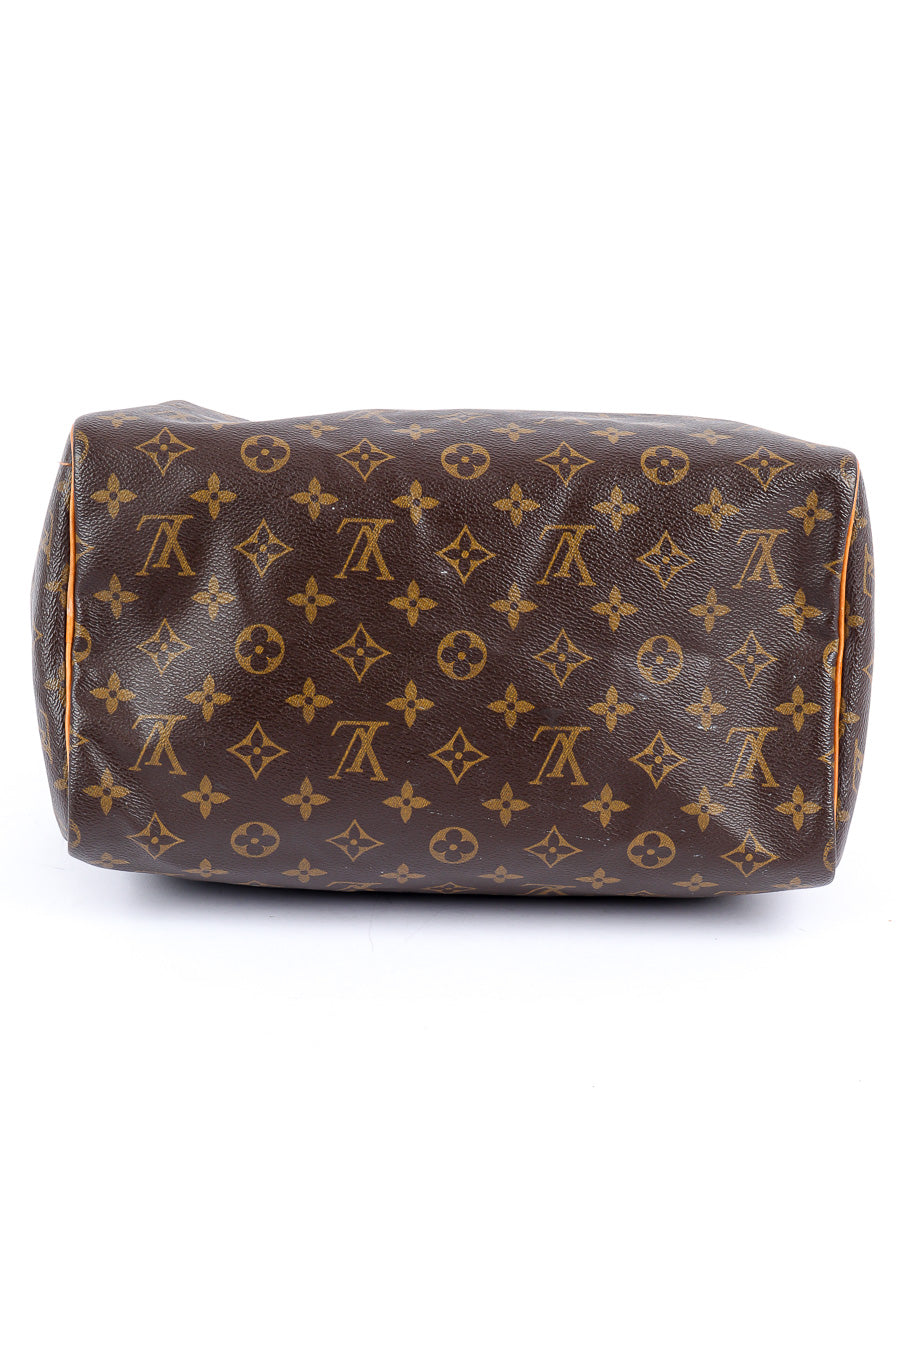 Louis Vuitton classic monogram speedy 30 bag product shot @recessla